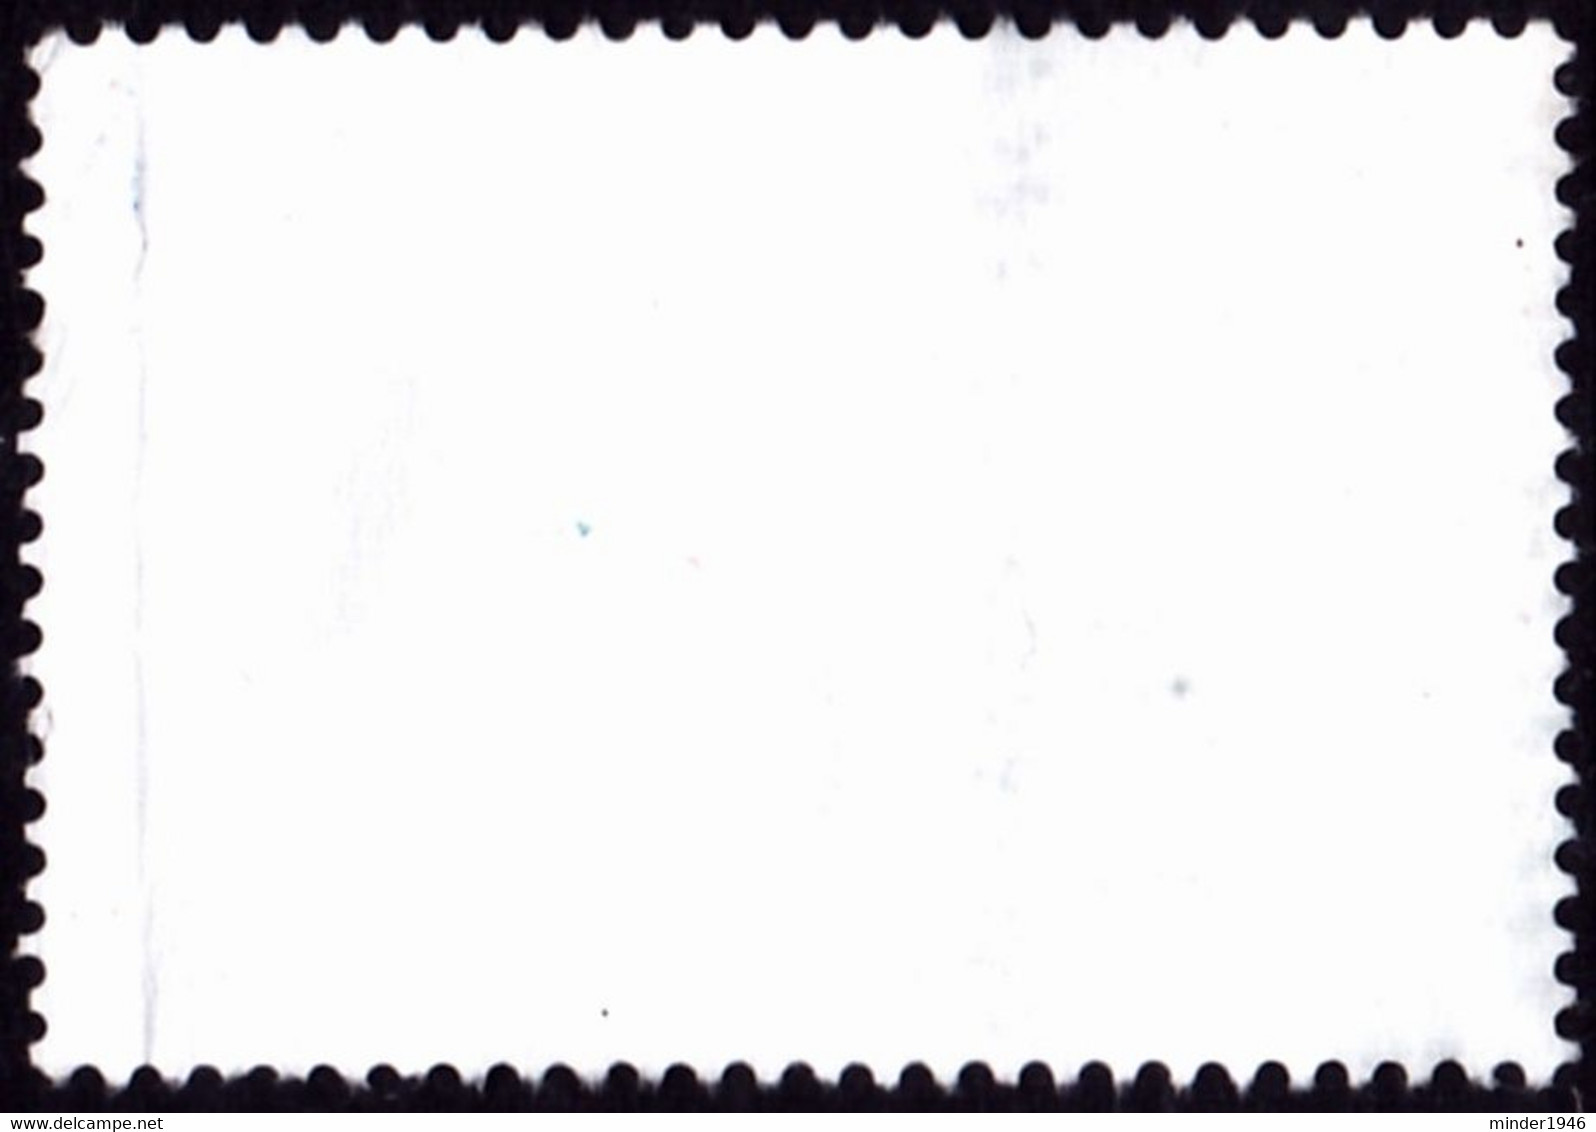 AUSTRALIA 2014 QEII $3 Multicoloured, Birds - Self Adhesive Stamps FU - Used Stamps